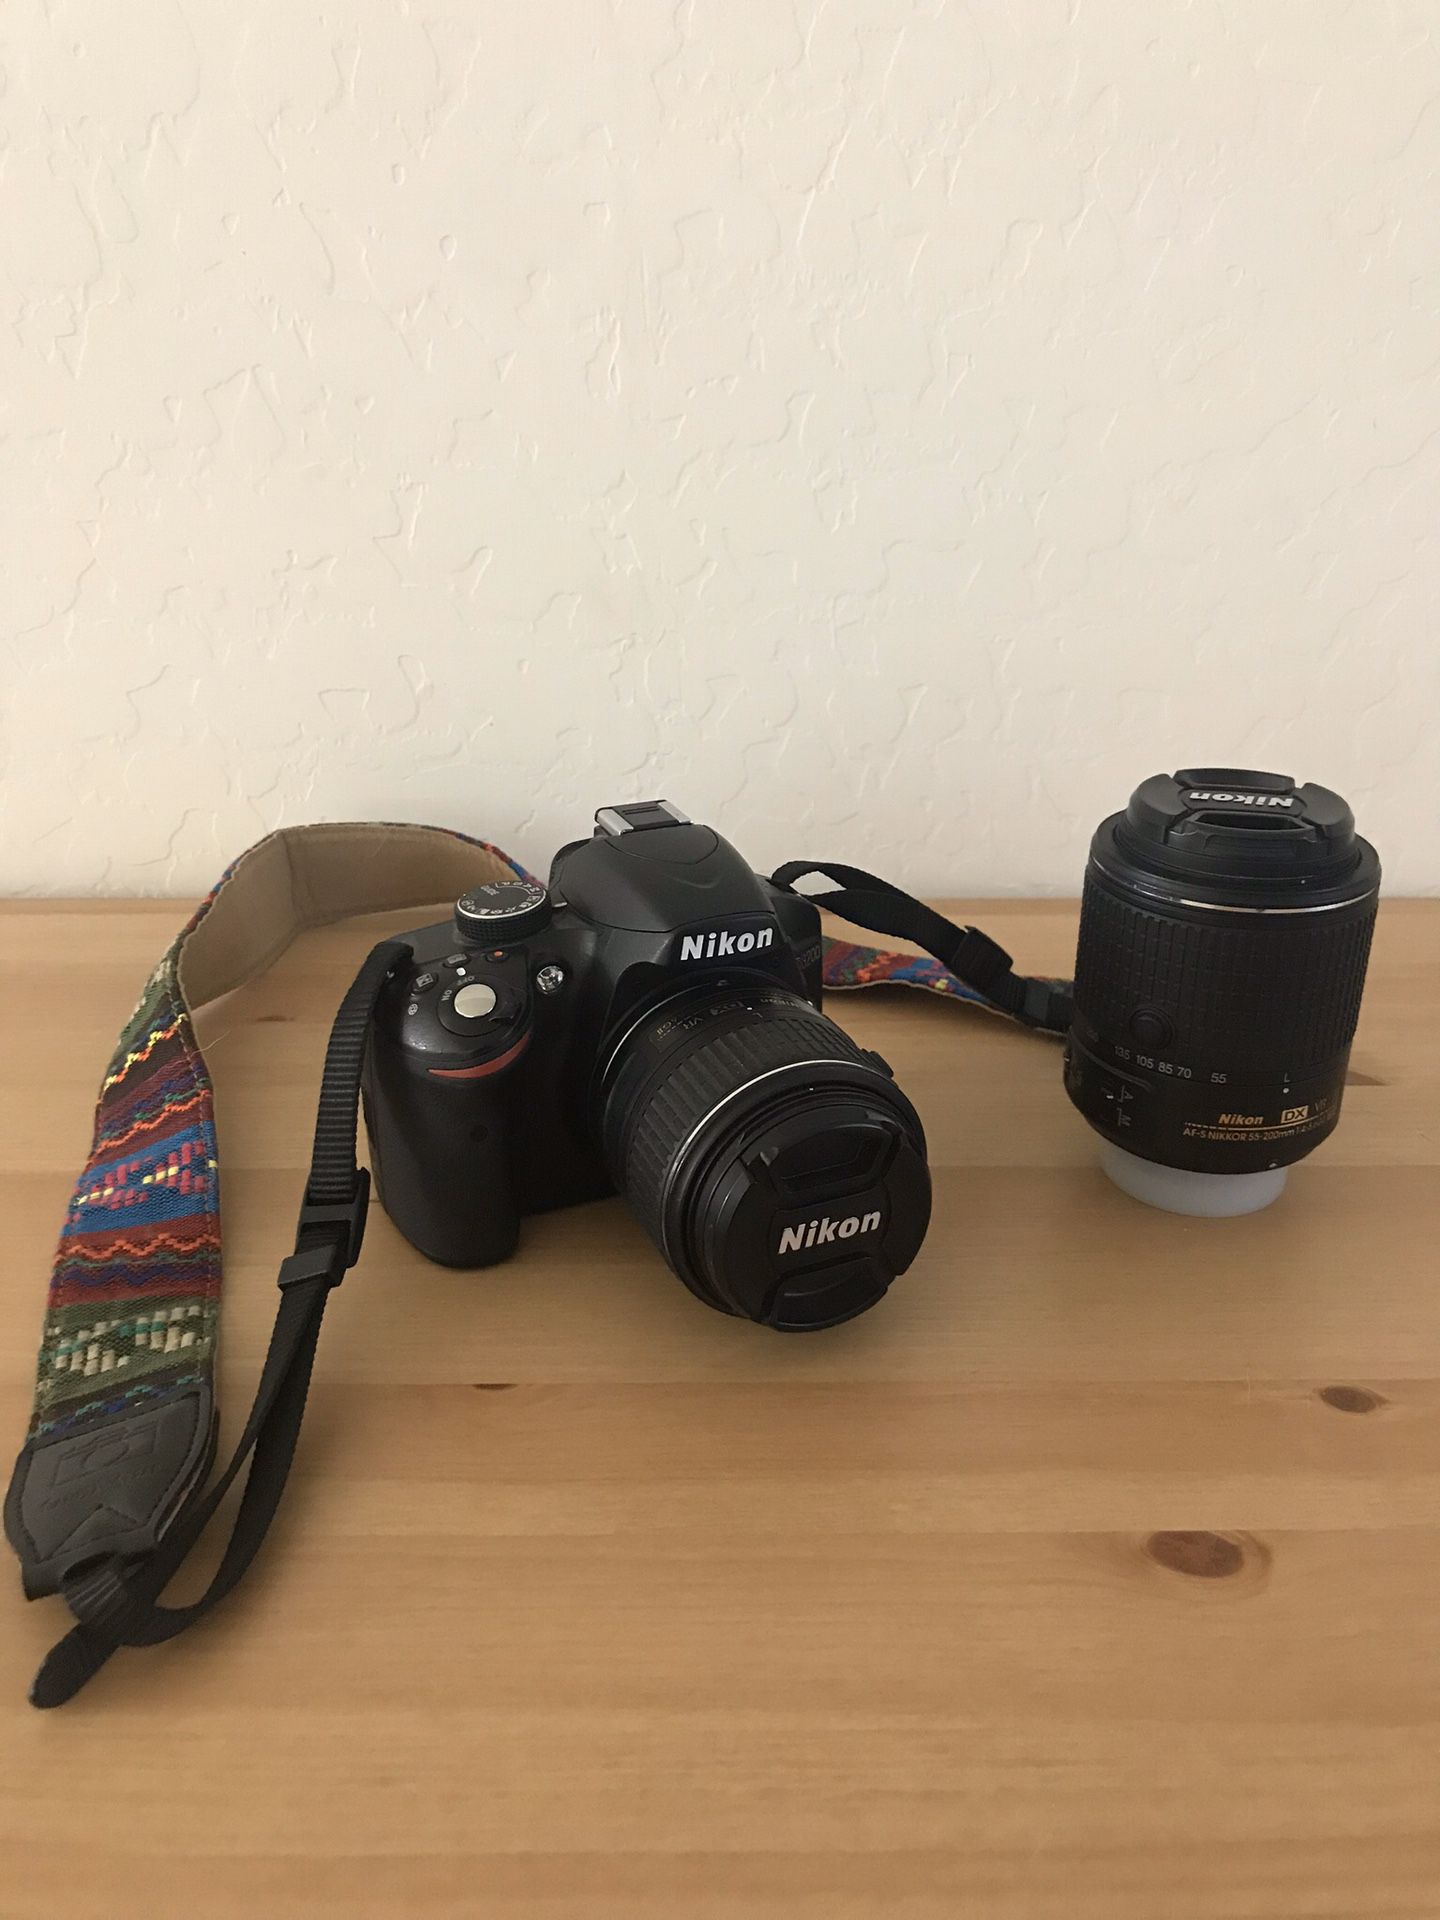 Nikon D3200 with VR DX lenses